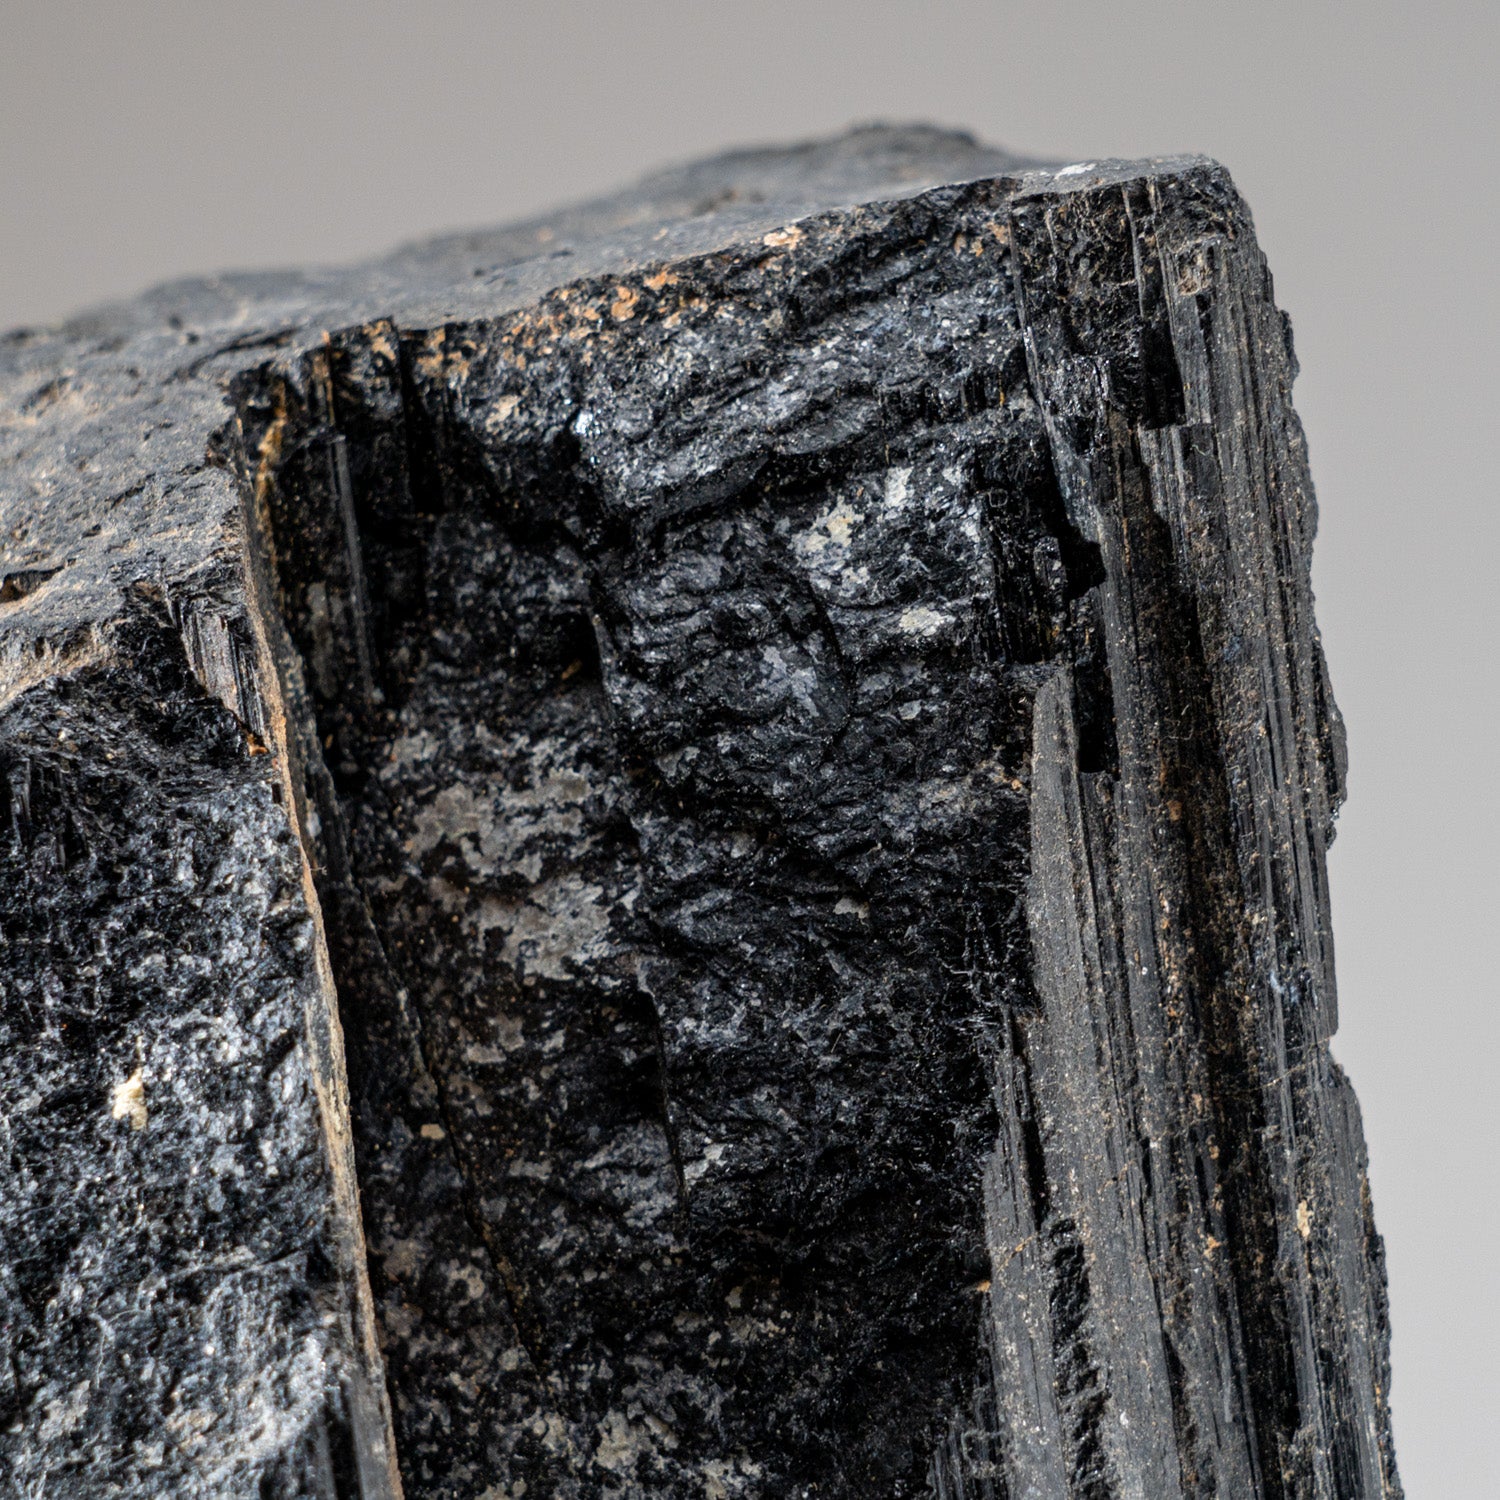 Genuine Black Tourmaline Crystal From India (16.8 lbs)